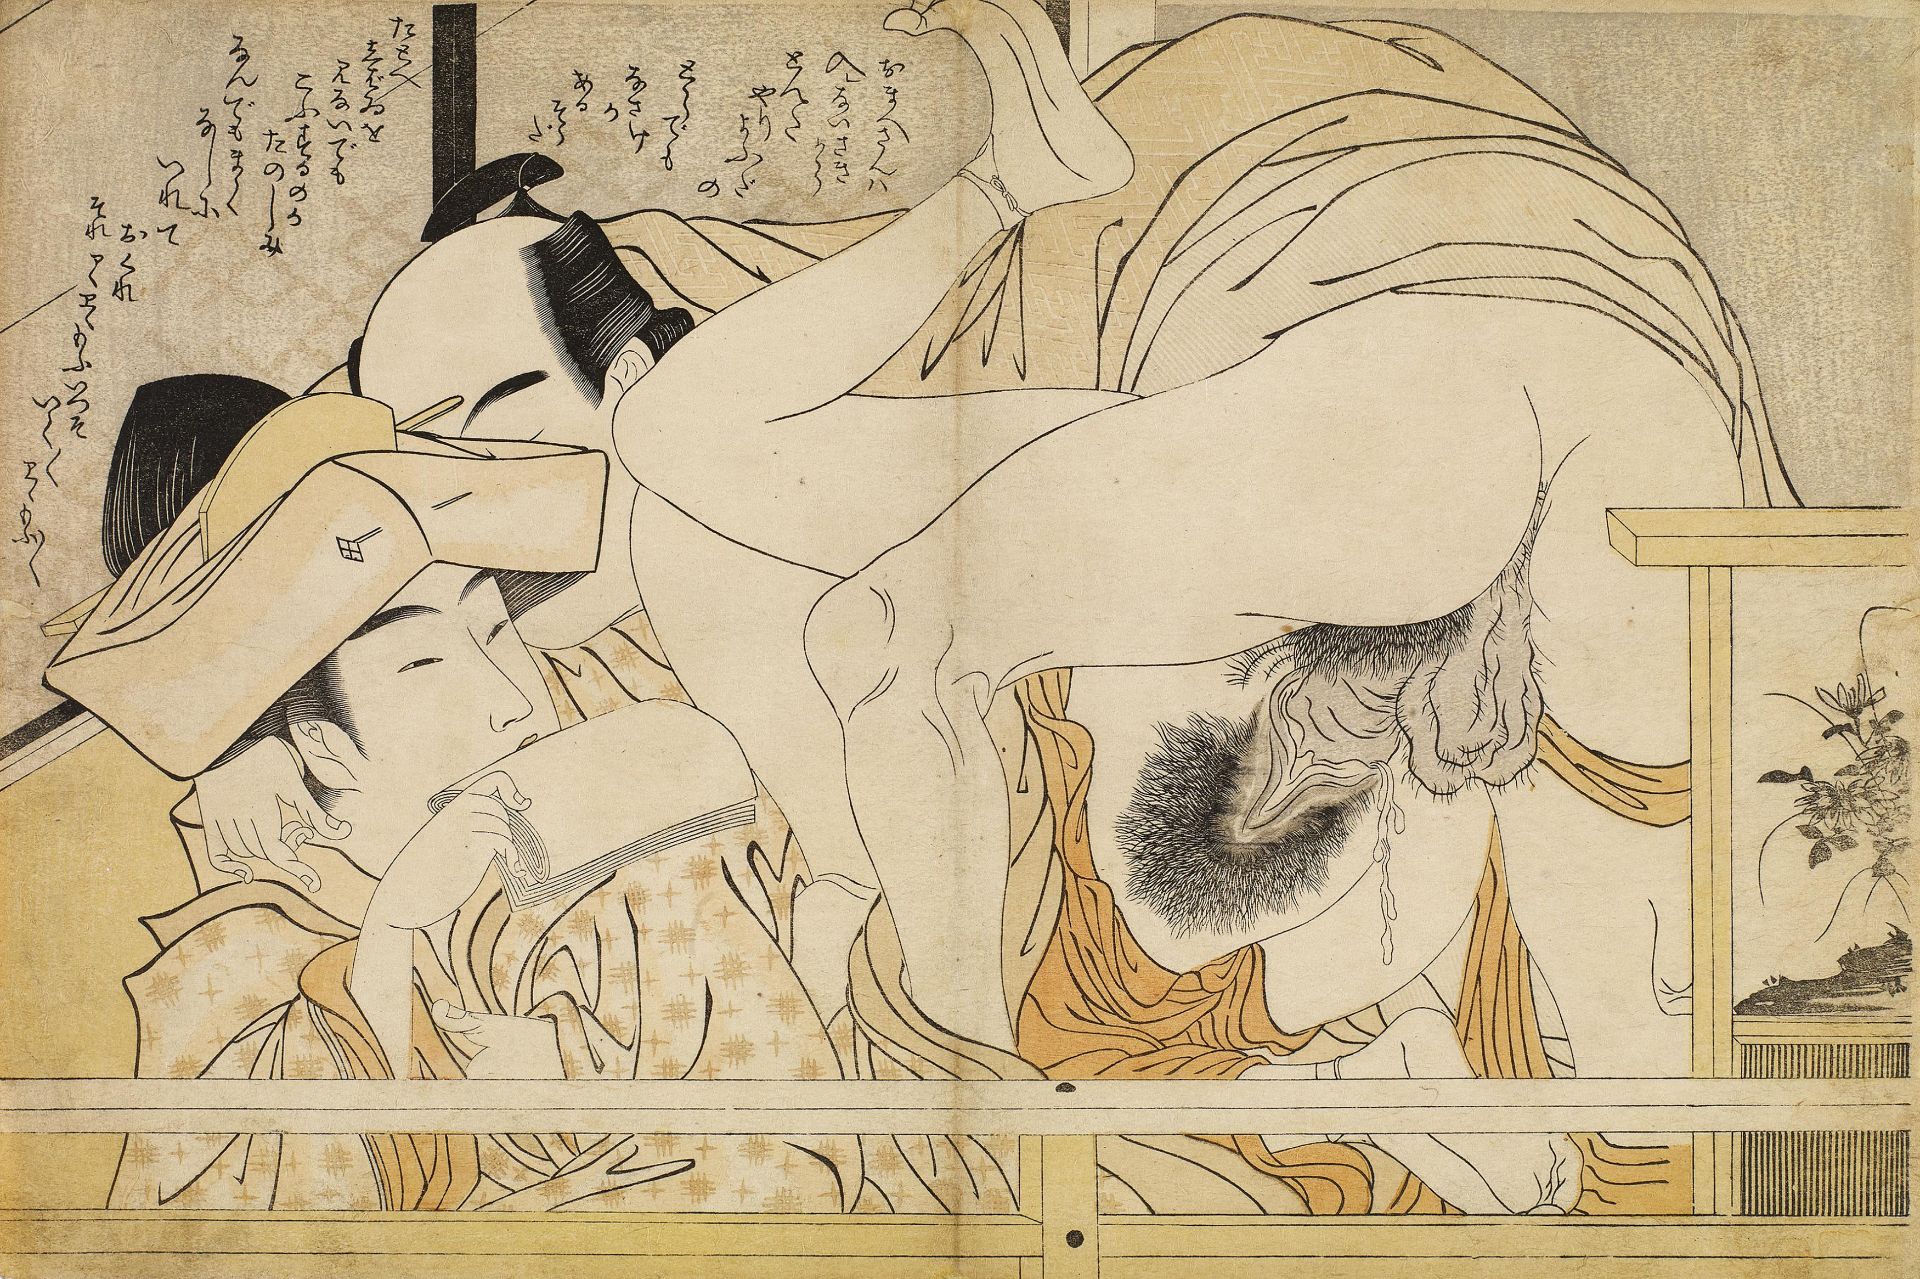 13 Blätter der Shunga-Serie "Fumi no kiyogaki" - Image 11 of 27